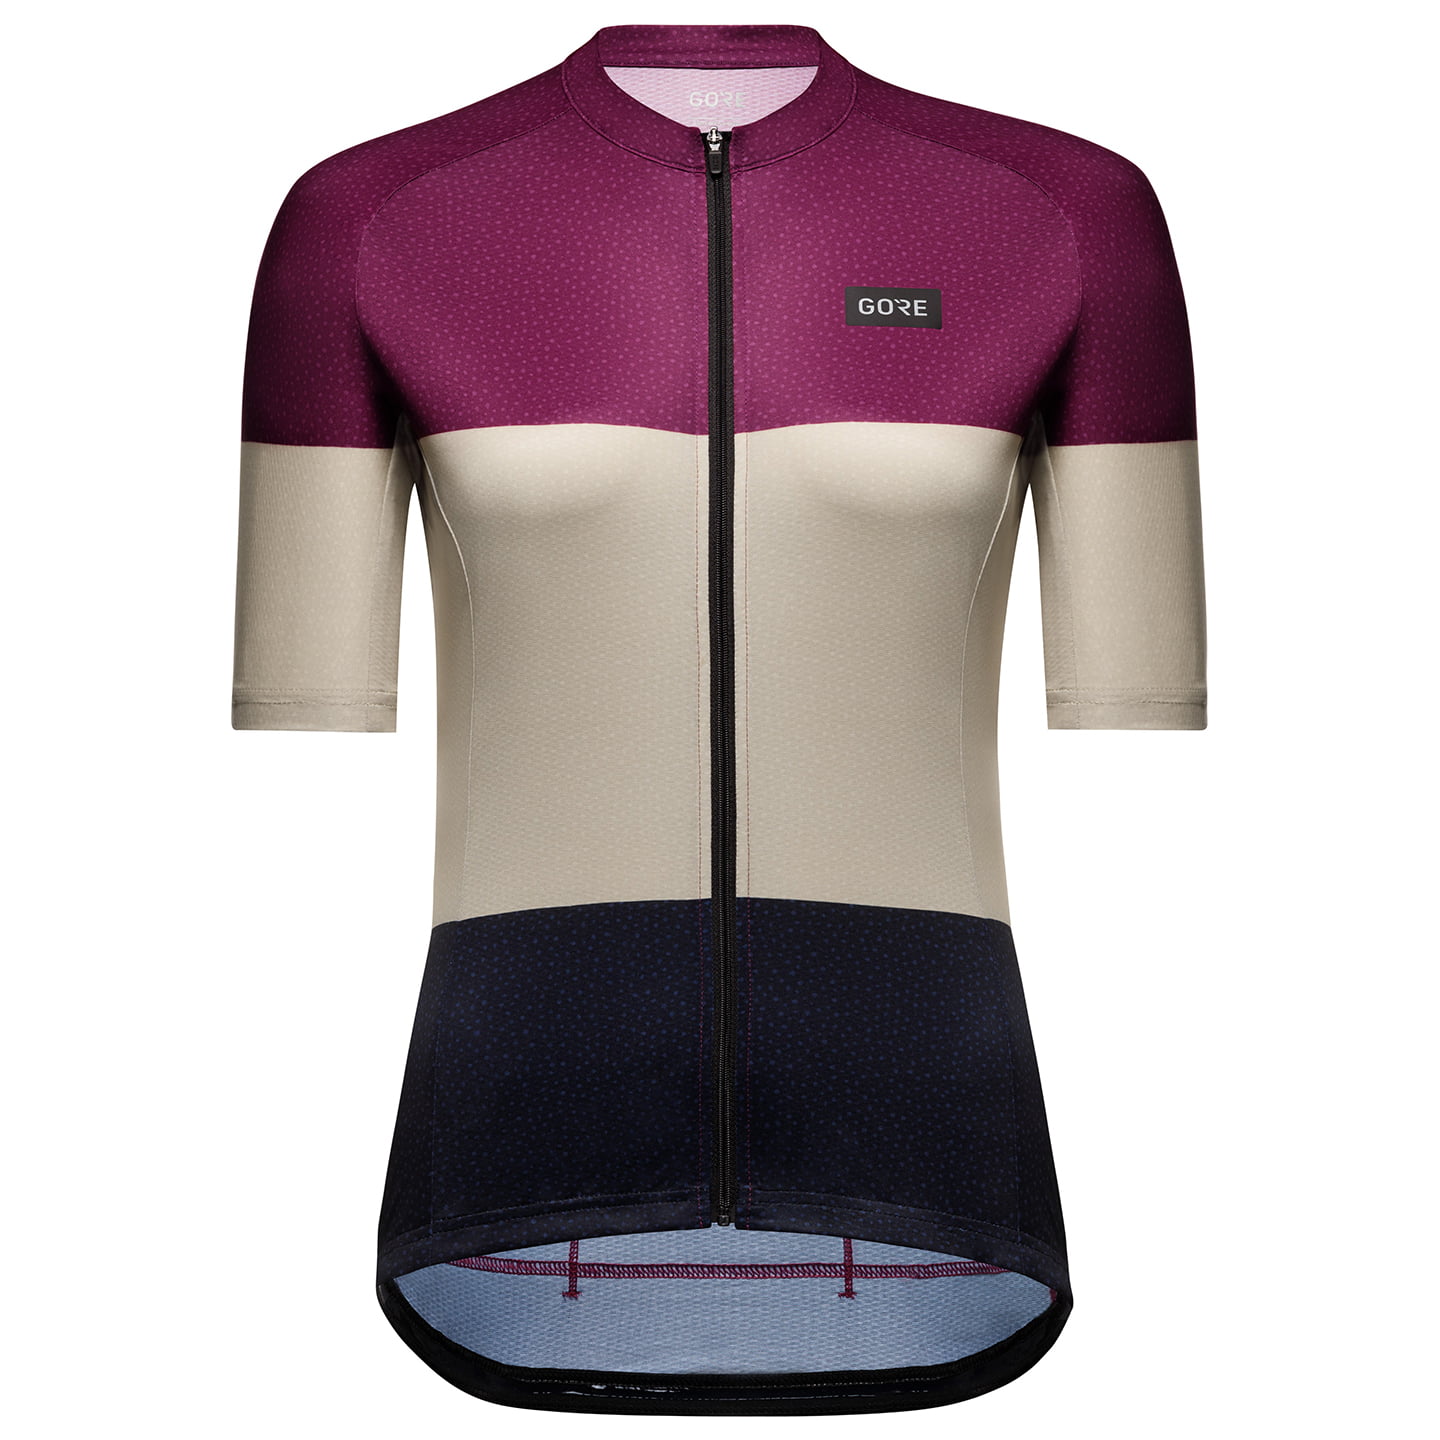 Spirit Stripes Women’s Jersey Women’s Short Sleeve Jersey, size 36, Bike Jersey, Cycling clothes